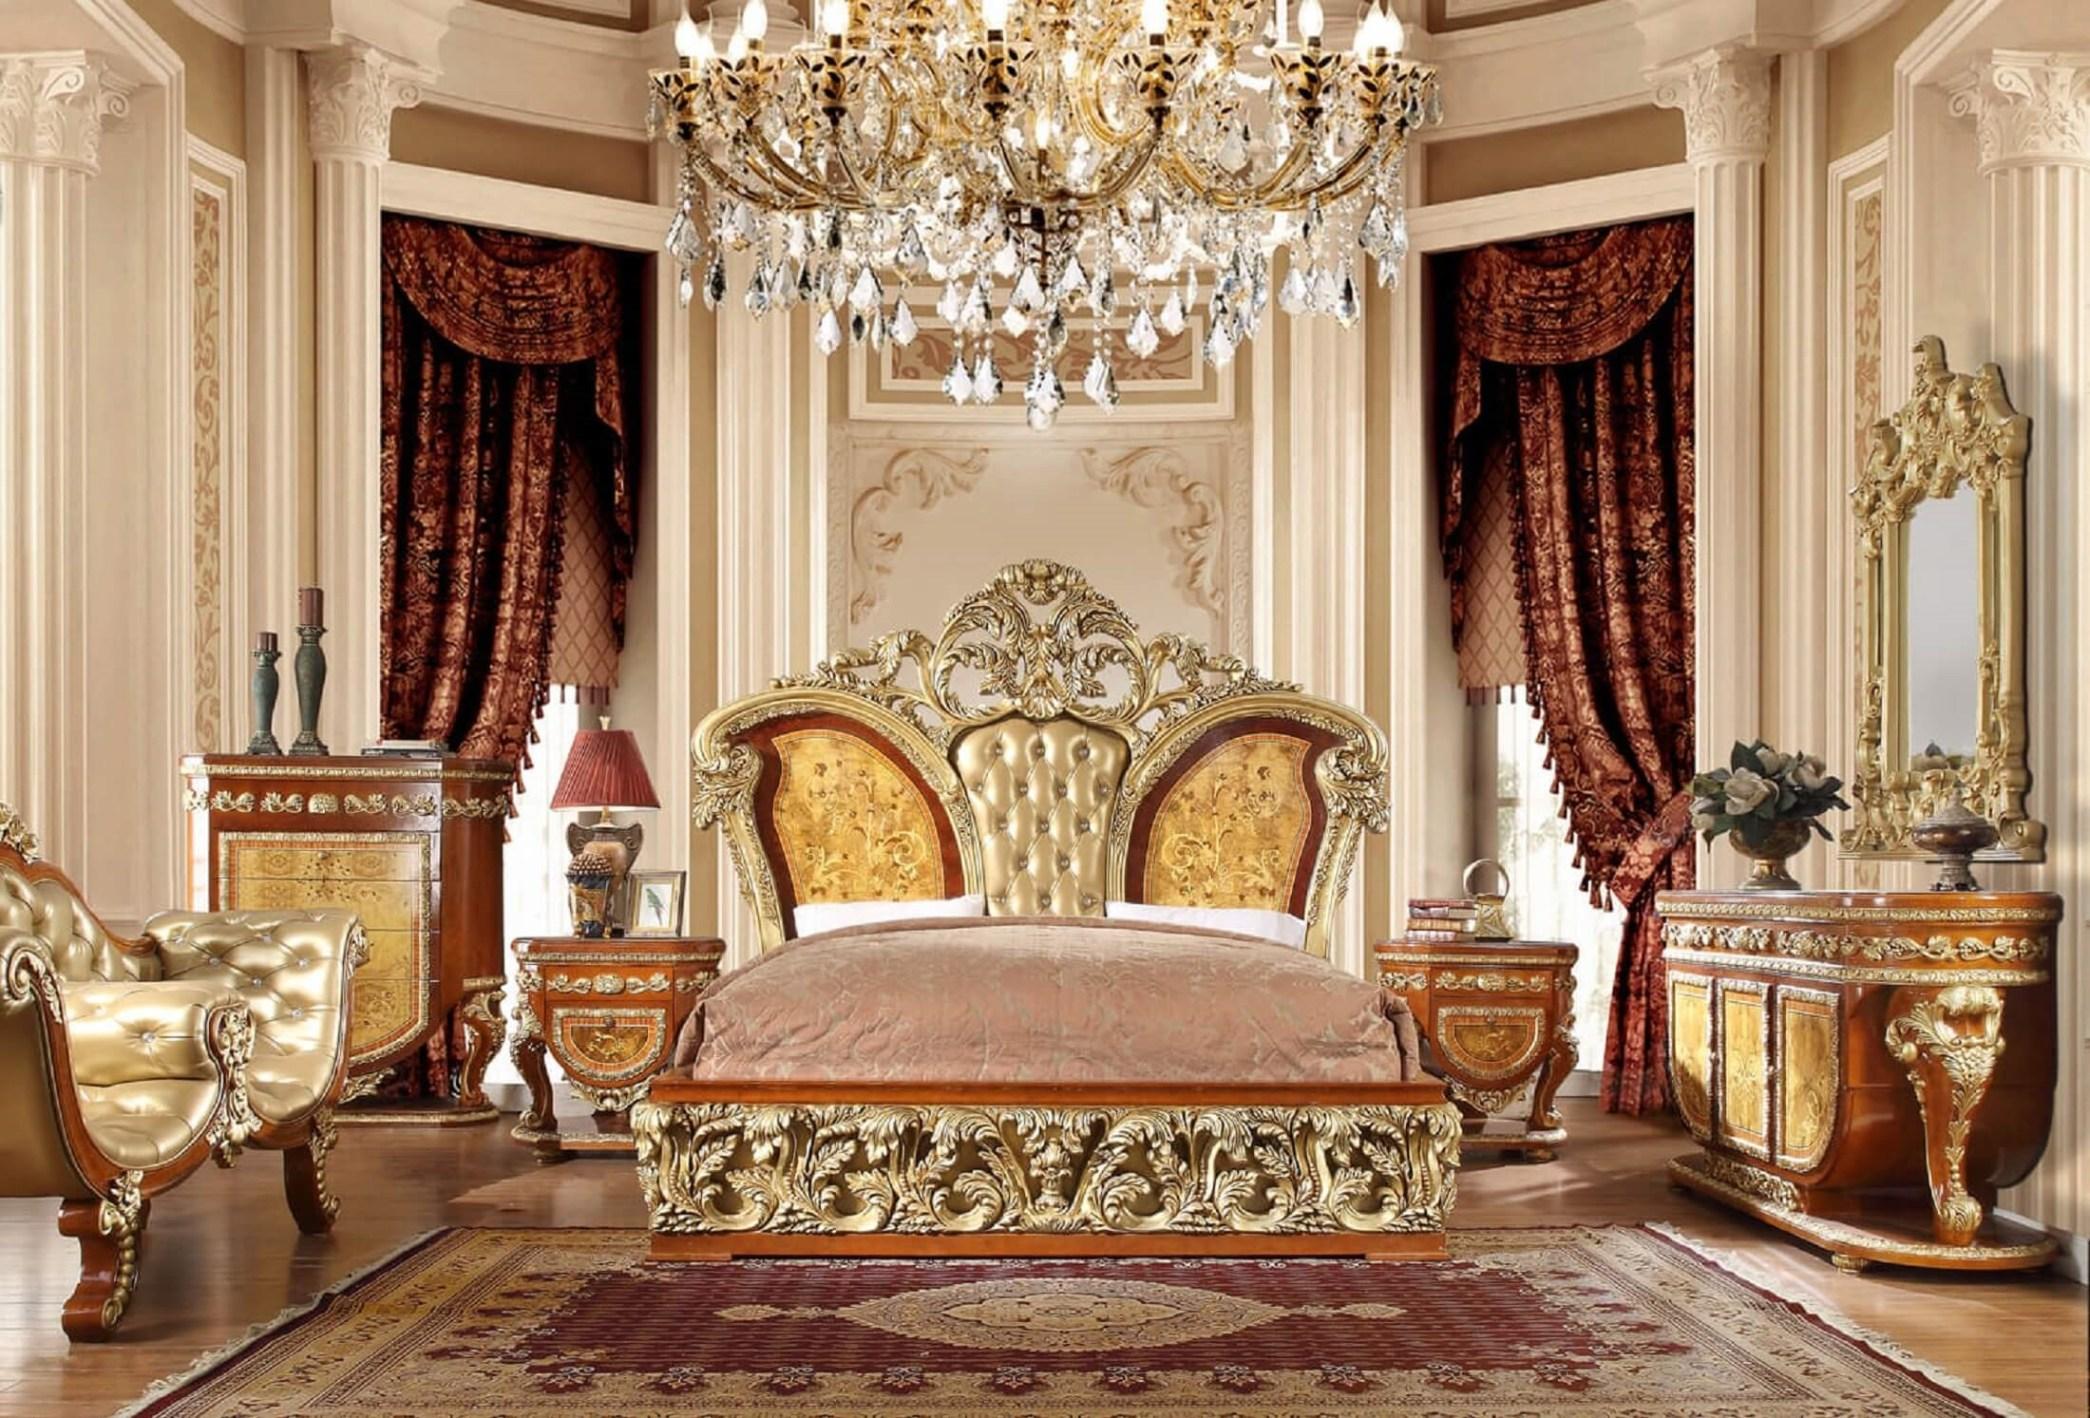 

    
Luxury KING Bedroom Set 5 Pcs Gold Curved Wood Homey Design HD-8024
